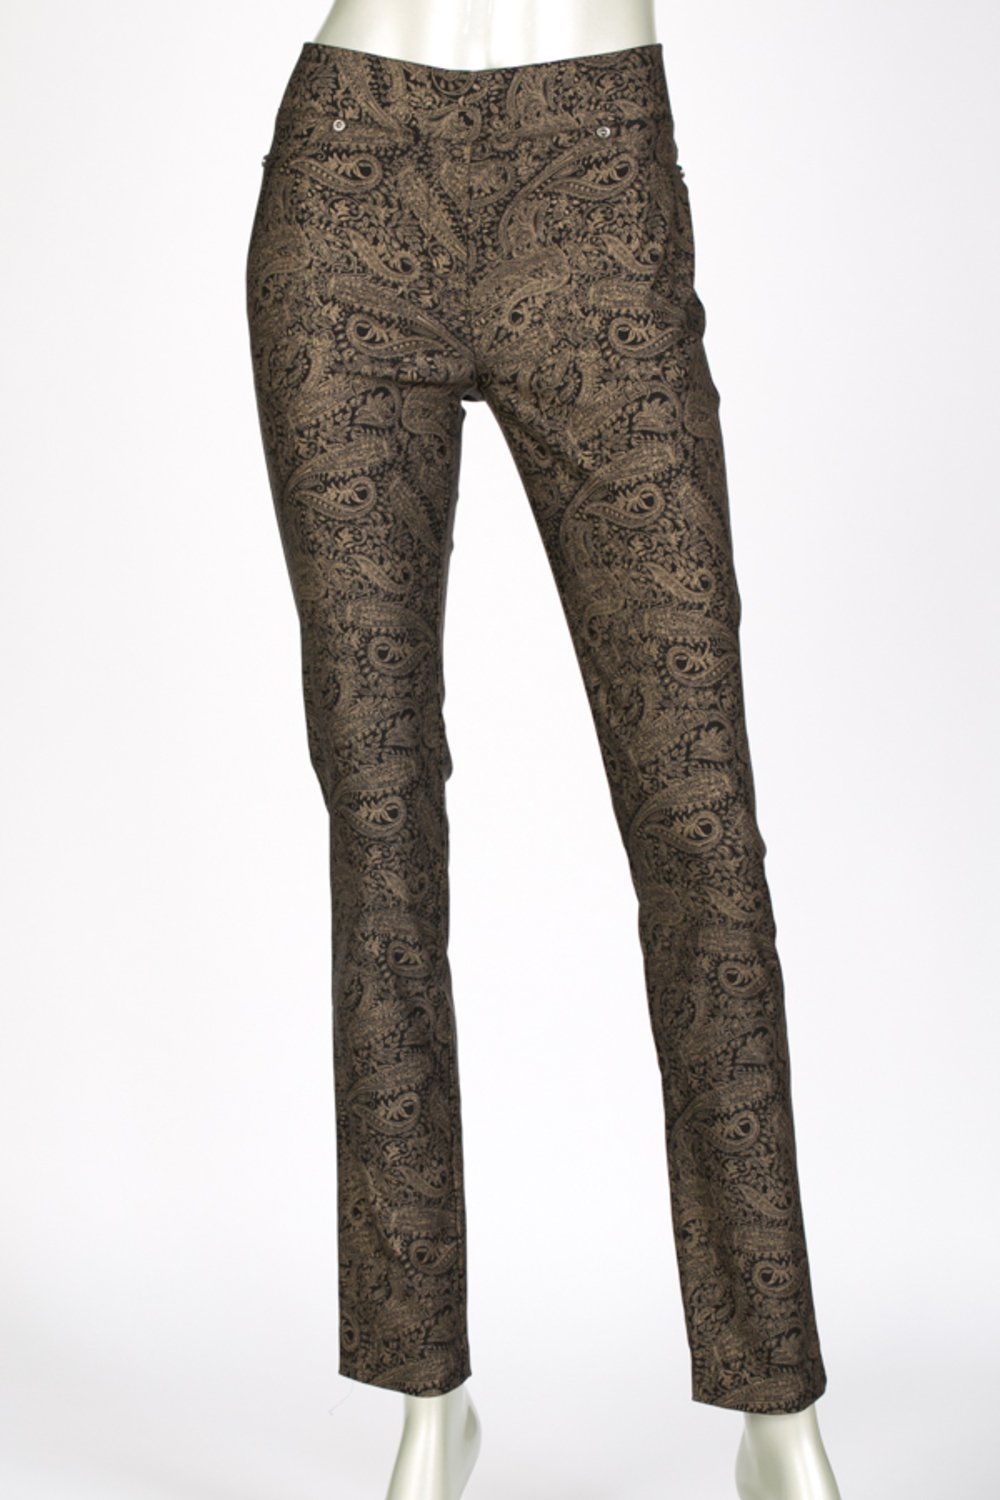 Joseph Ribkoff pantalon style 144788. Noir/or